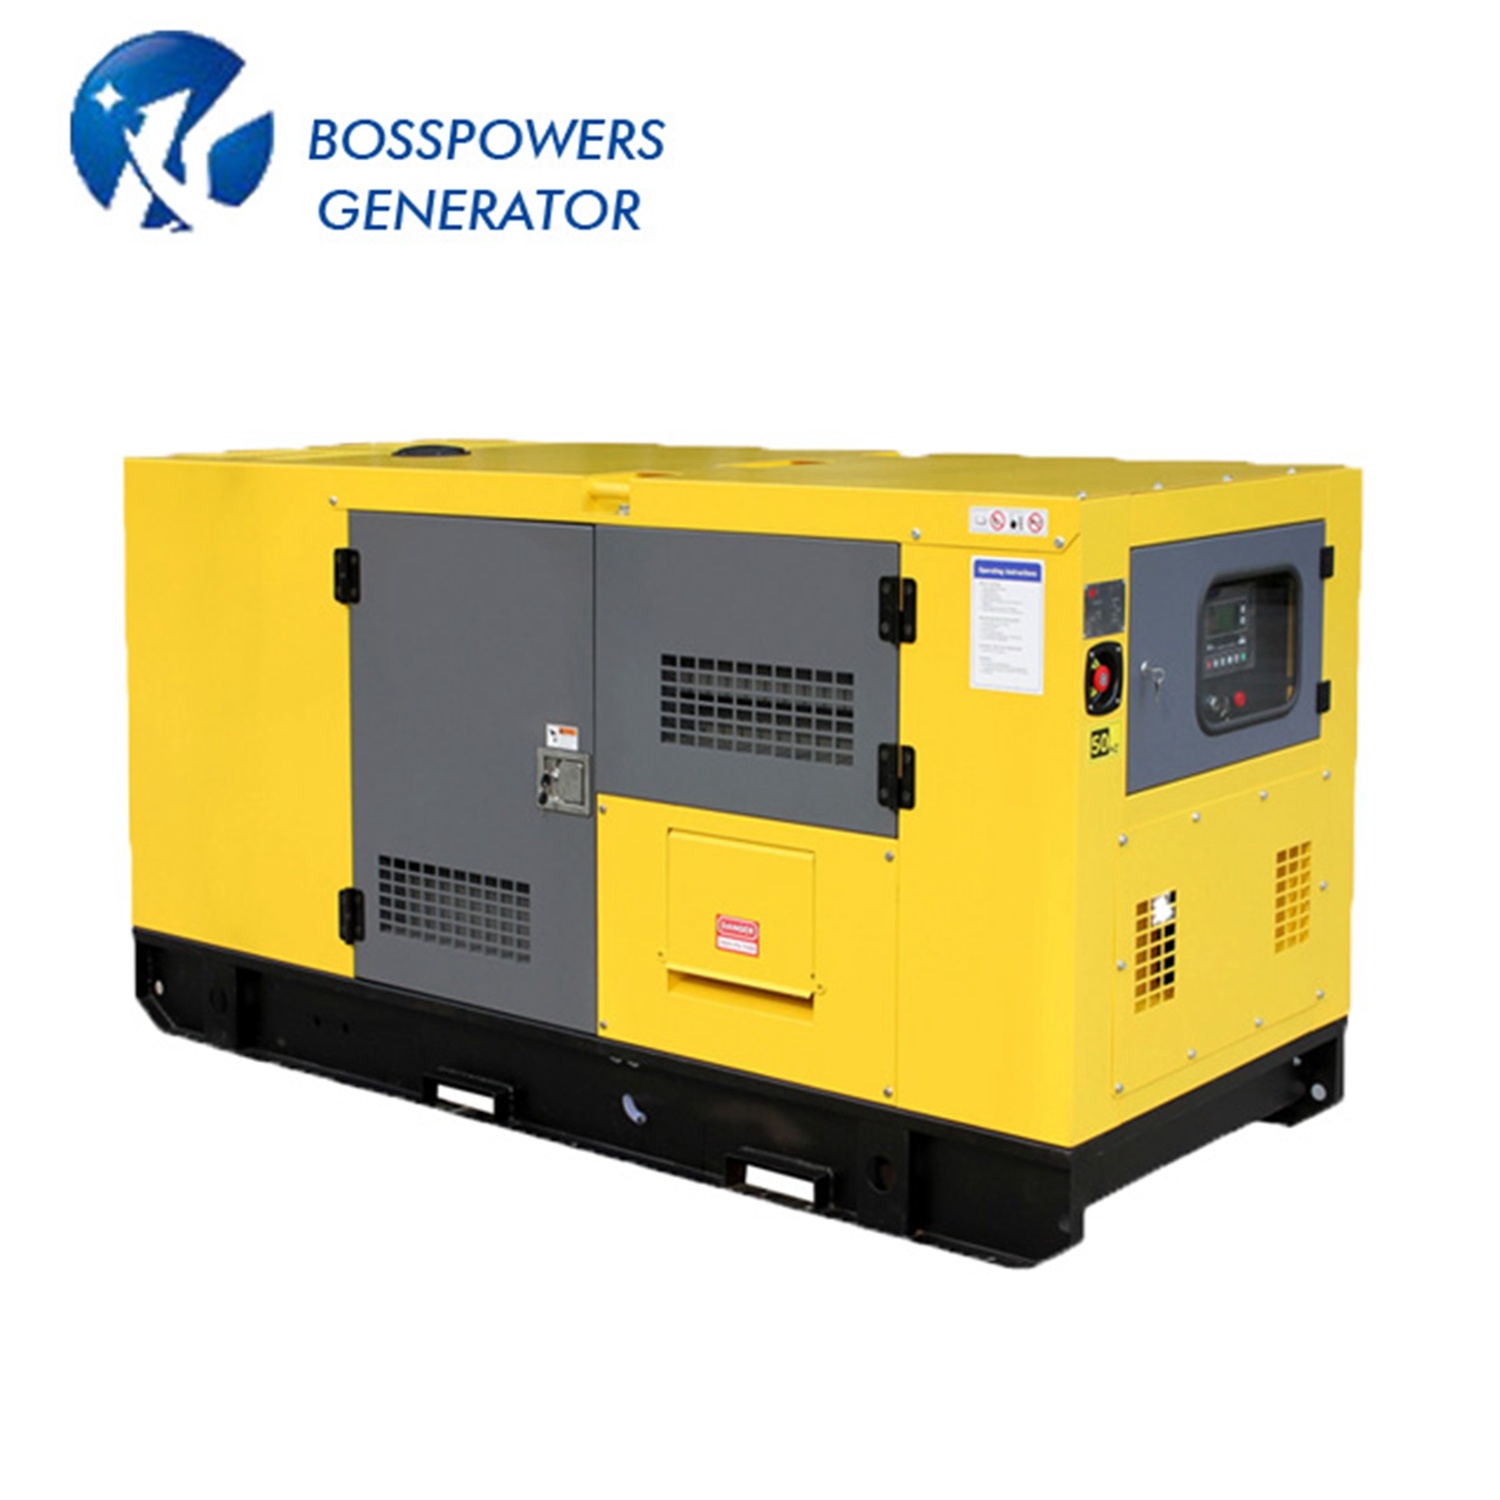 100kw 125kVA 60Hz Silent Diesel Power Generator for Industrial